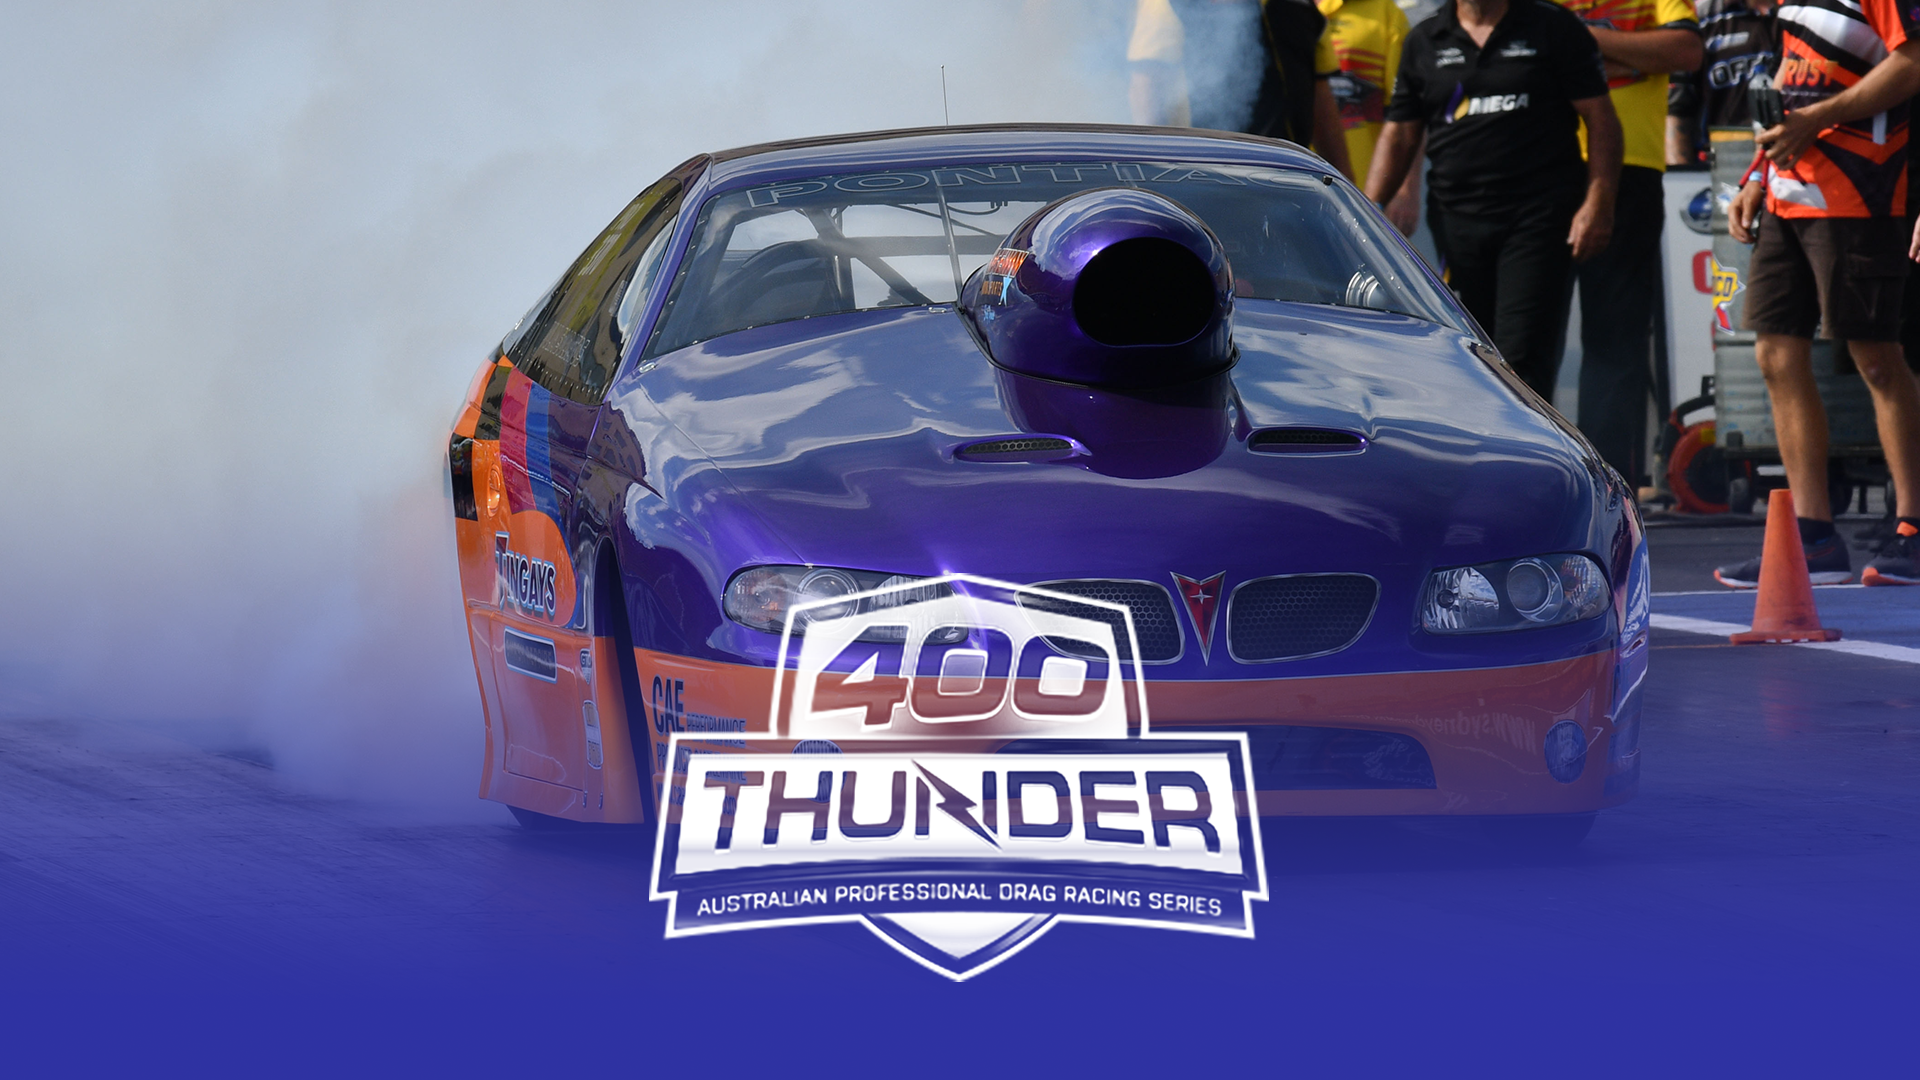 400 Thunder Australian Drag Racing Series, 2019